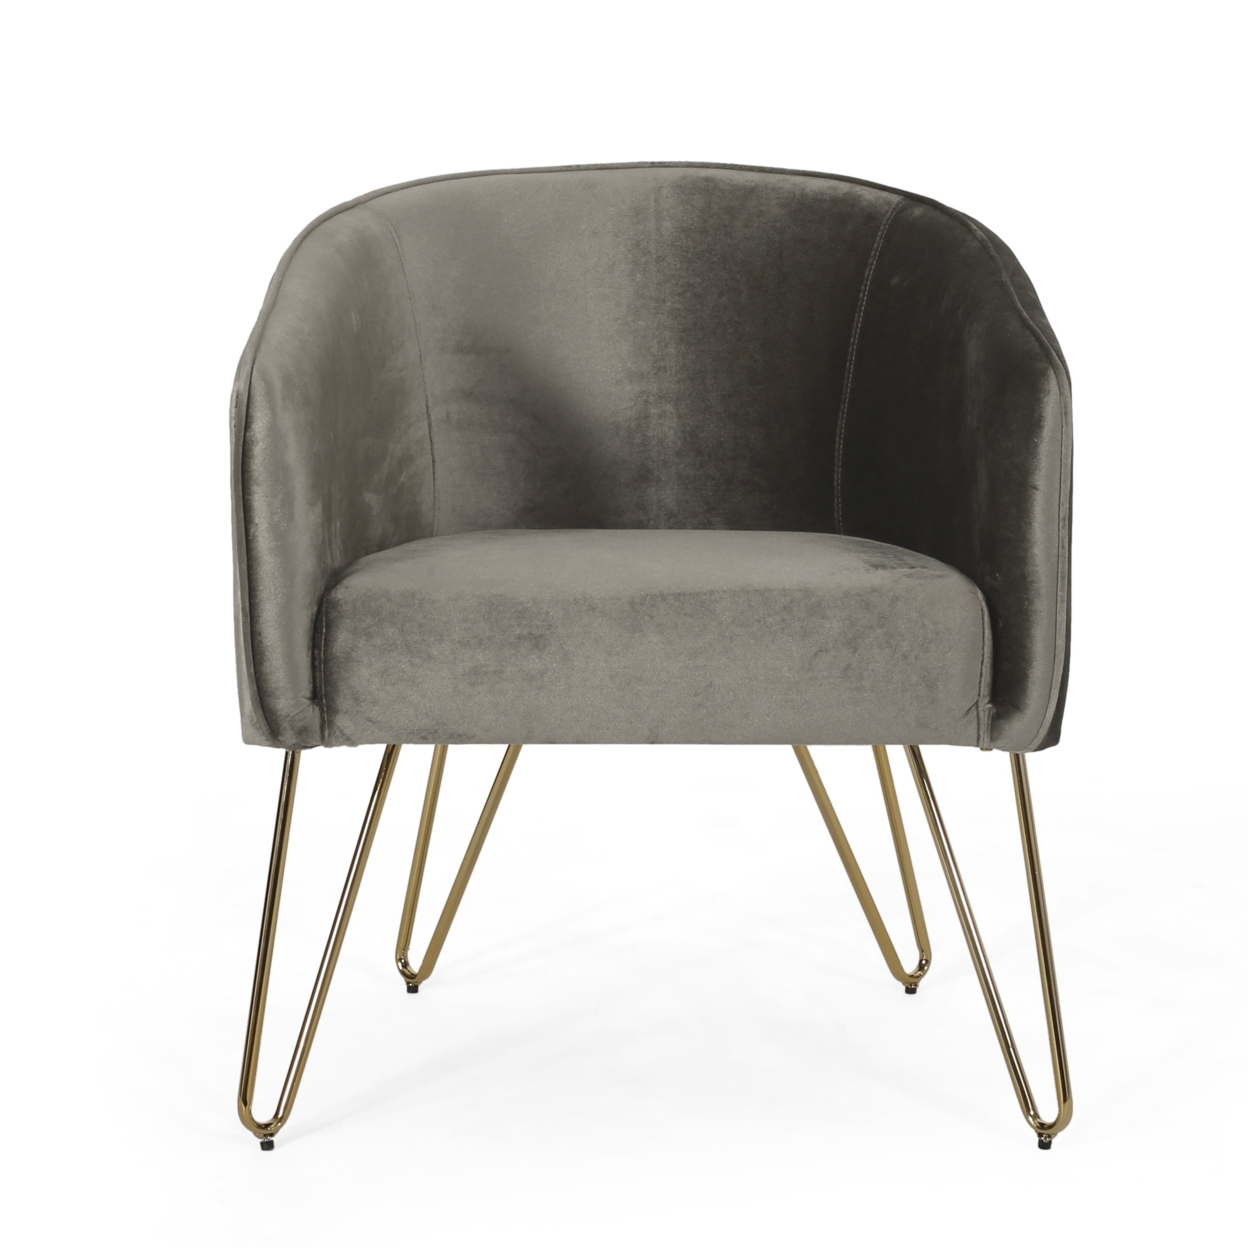 Paul Modern Glam Velvet Club Chair With Hairpin Legs - Gold/teal